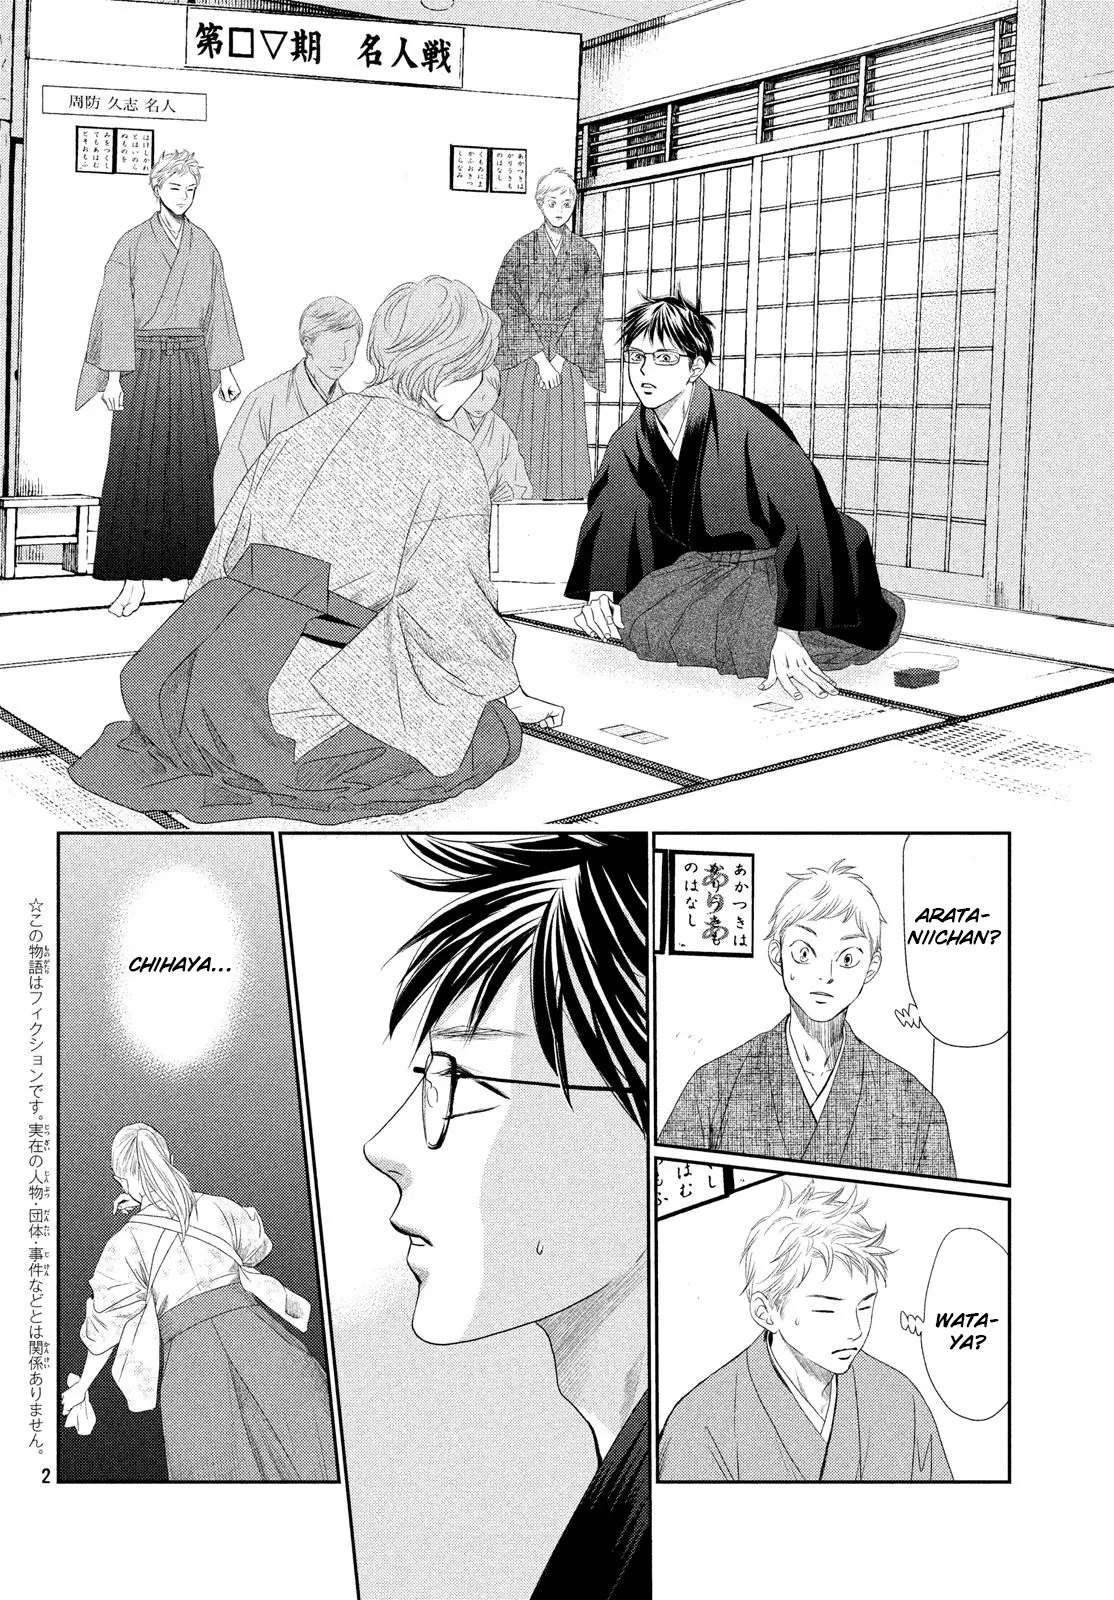 Chihayafuru - 226 page 2